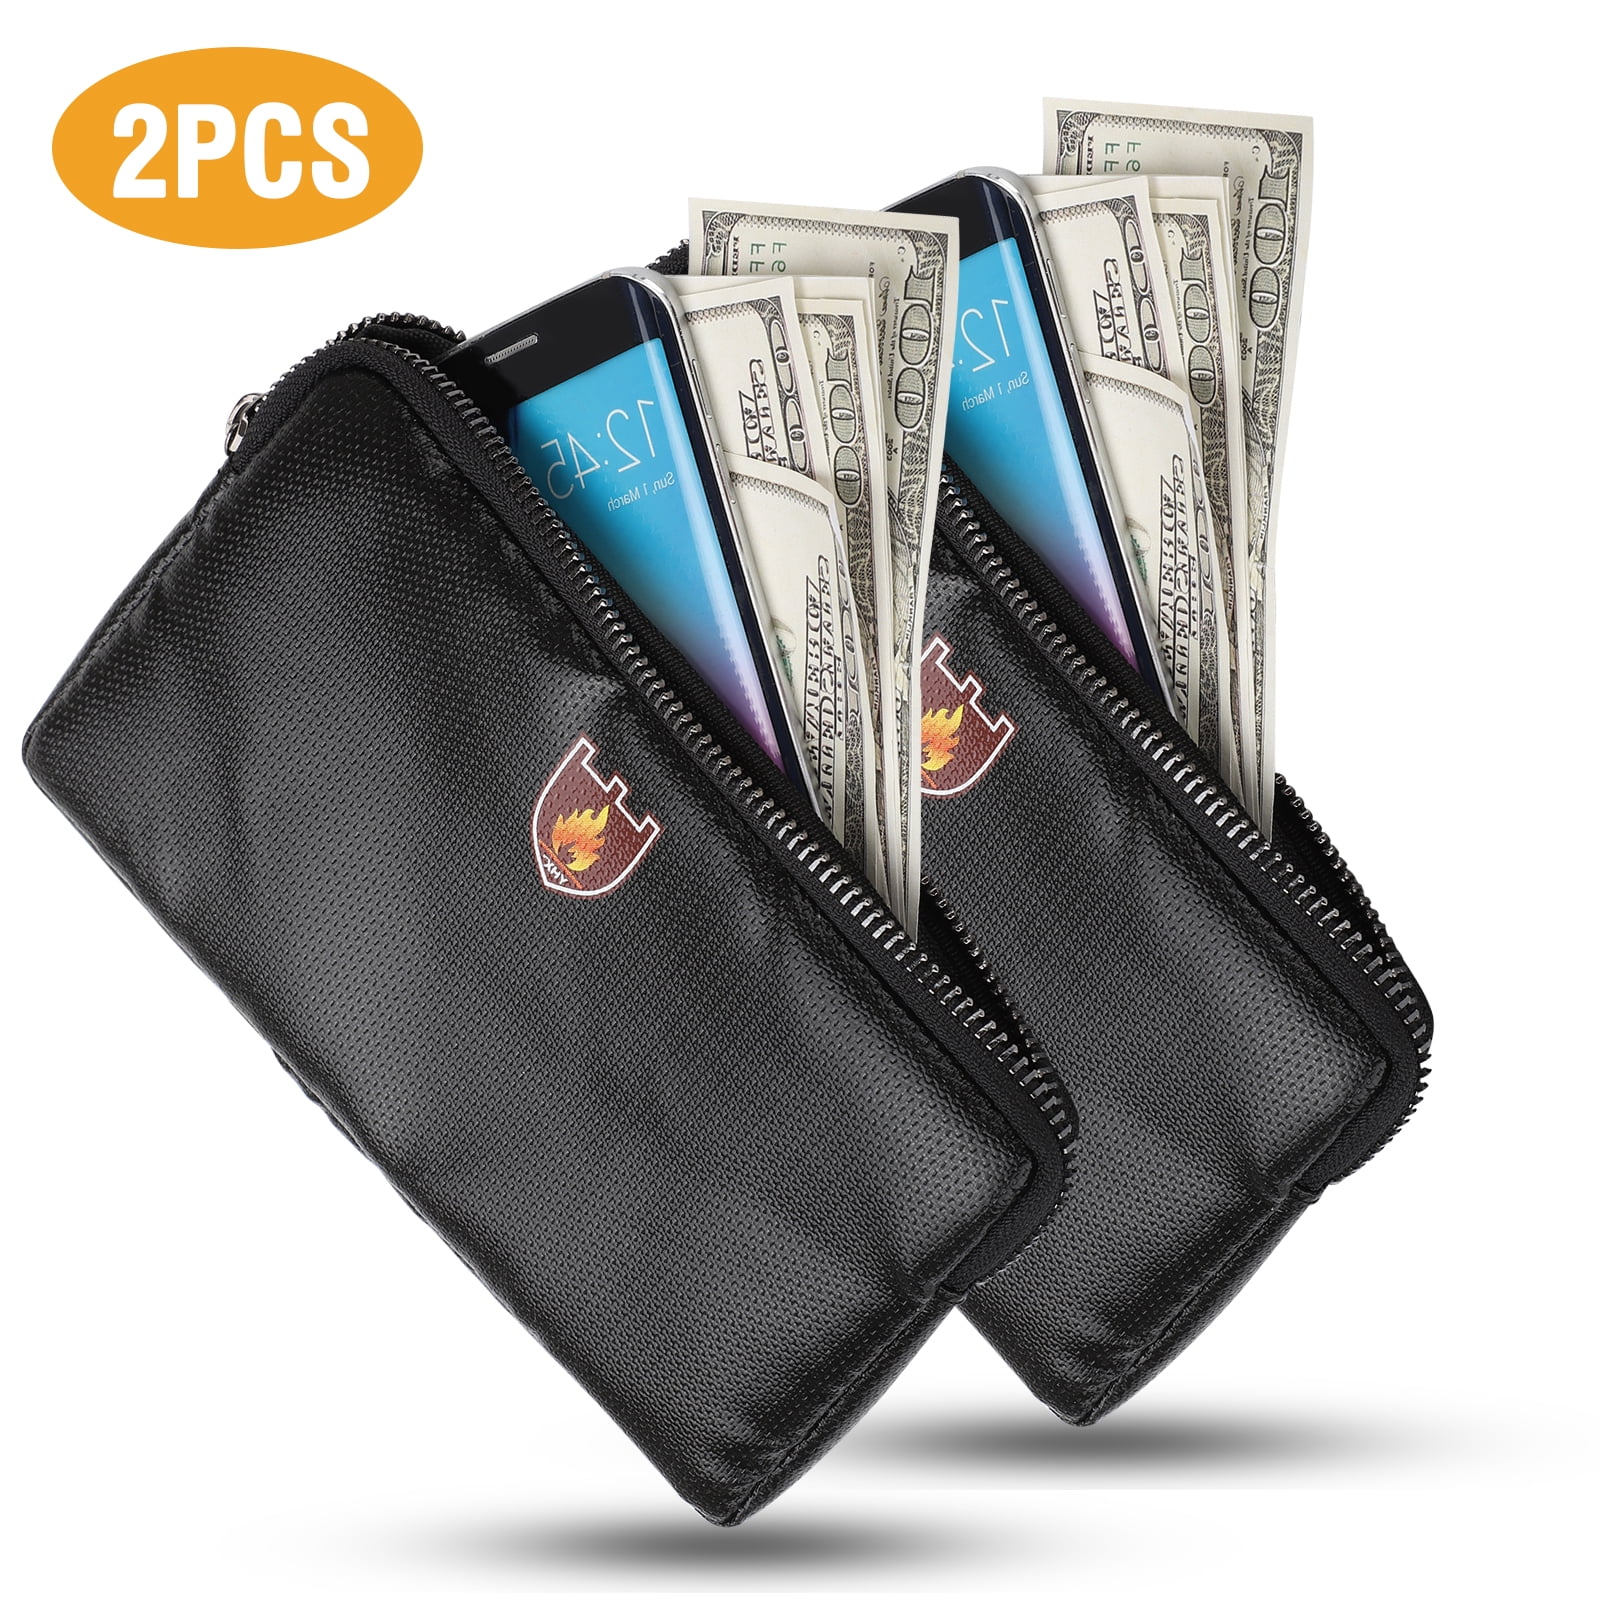 HIKIRA Fireproof Money Bag Passport Fireproof Bank Bag Fireproof Safe Storage Bag with Zipper for Bank Cash and Tablet Deposit 2PCS 10.6x6.8 Fireproof and Waterproof Cash Bag Money Bag 